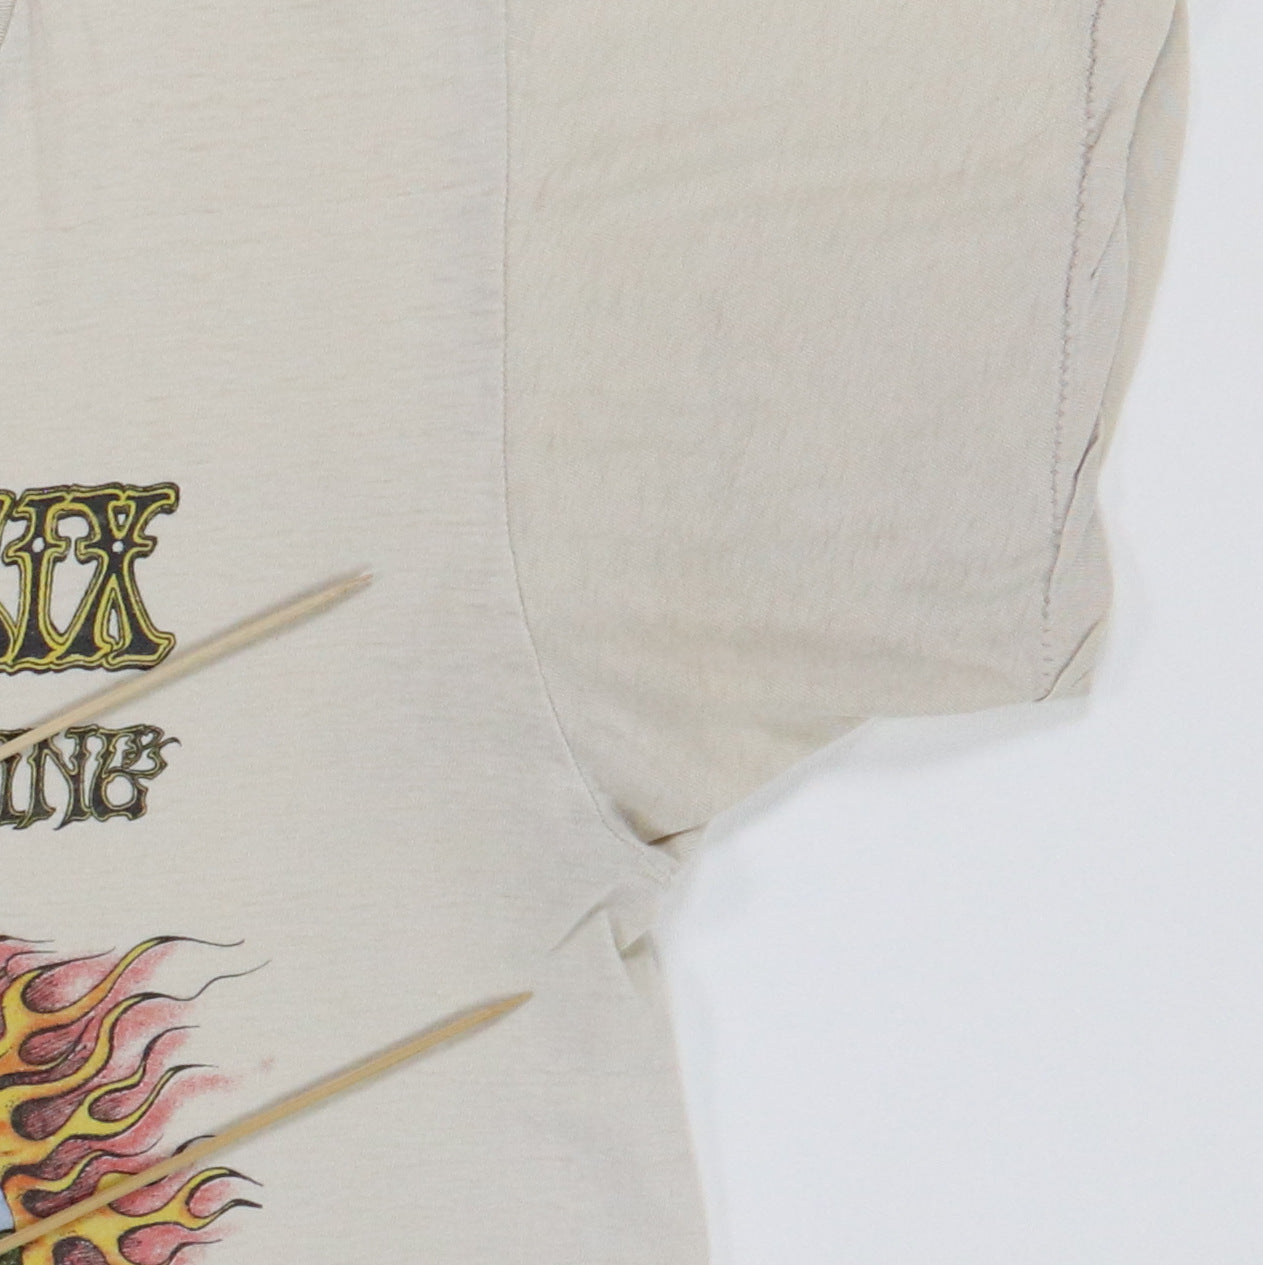 1970s Jimi Hendrix Winterland Shirt